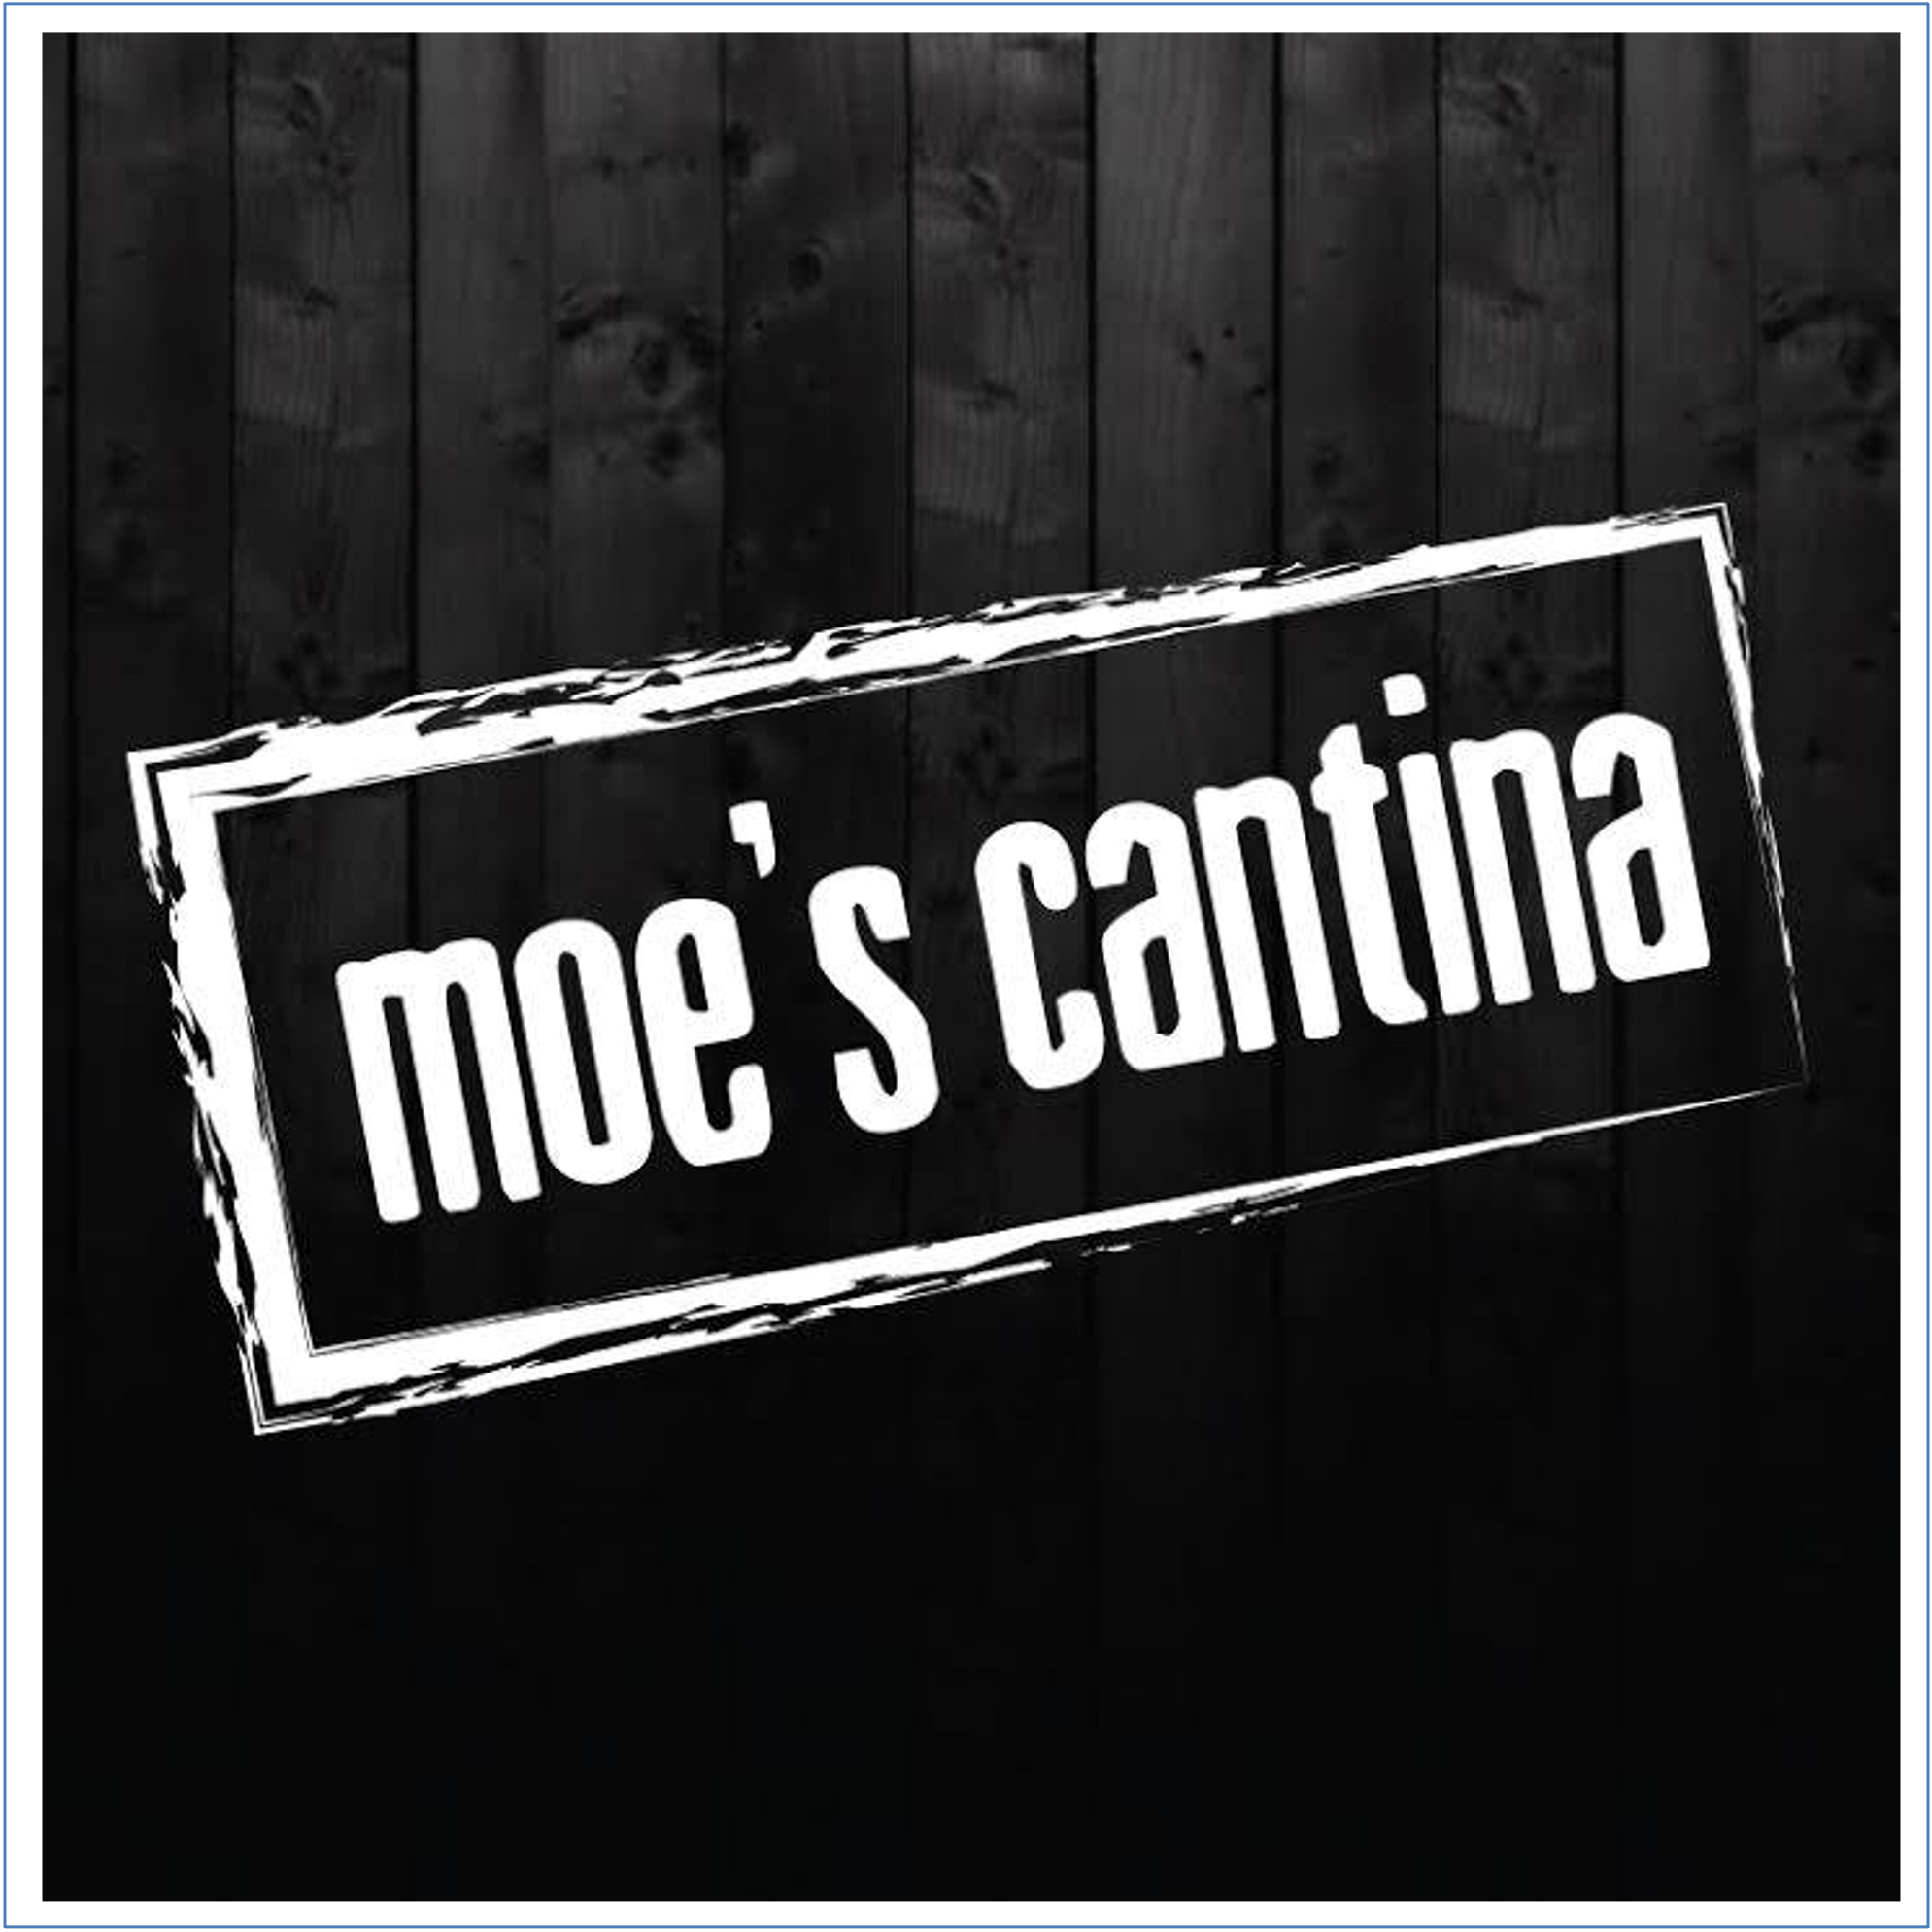 Moe's Cantina